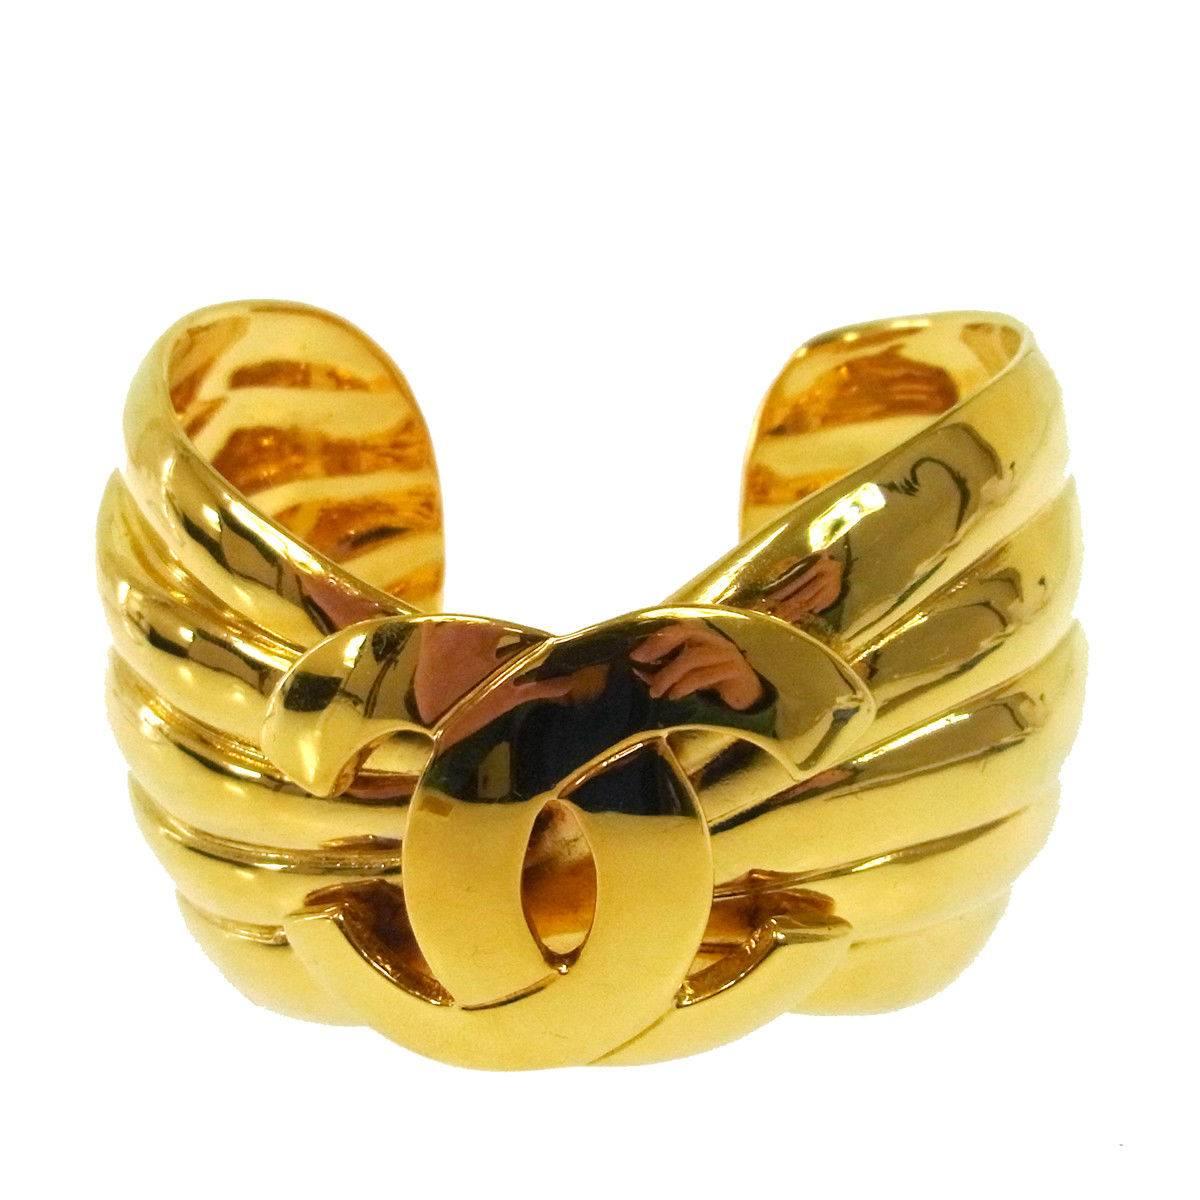 Chanel Gold Textured Charm Evening Statement Cuff Bracelet in Box